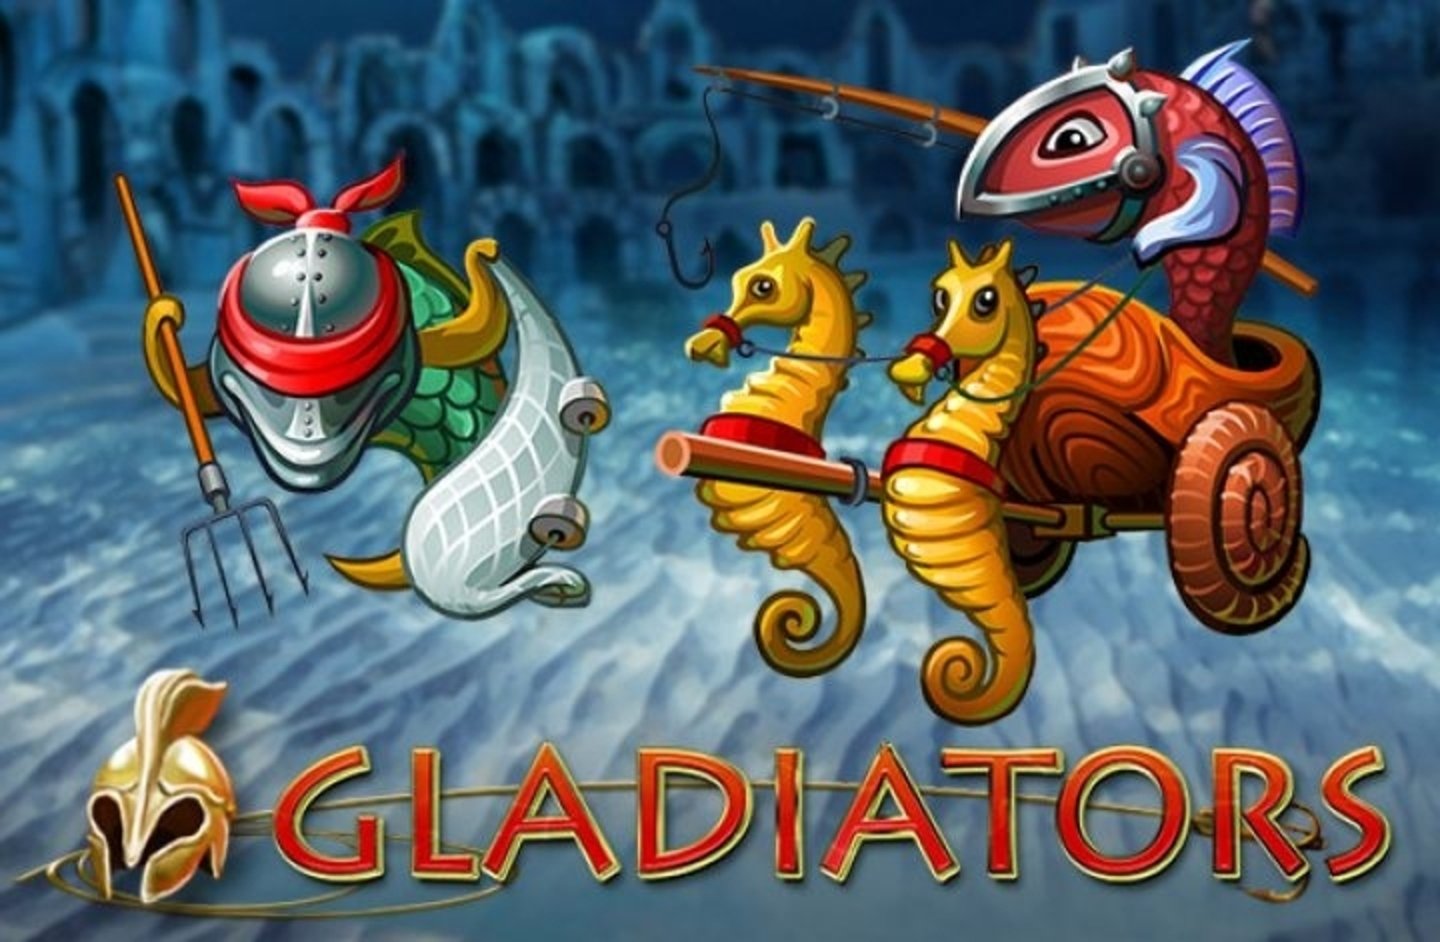 Gladiators demo